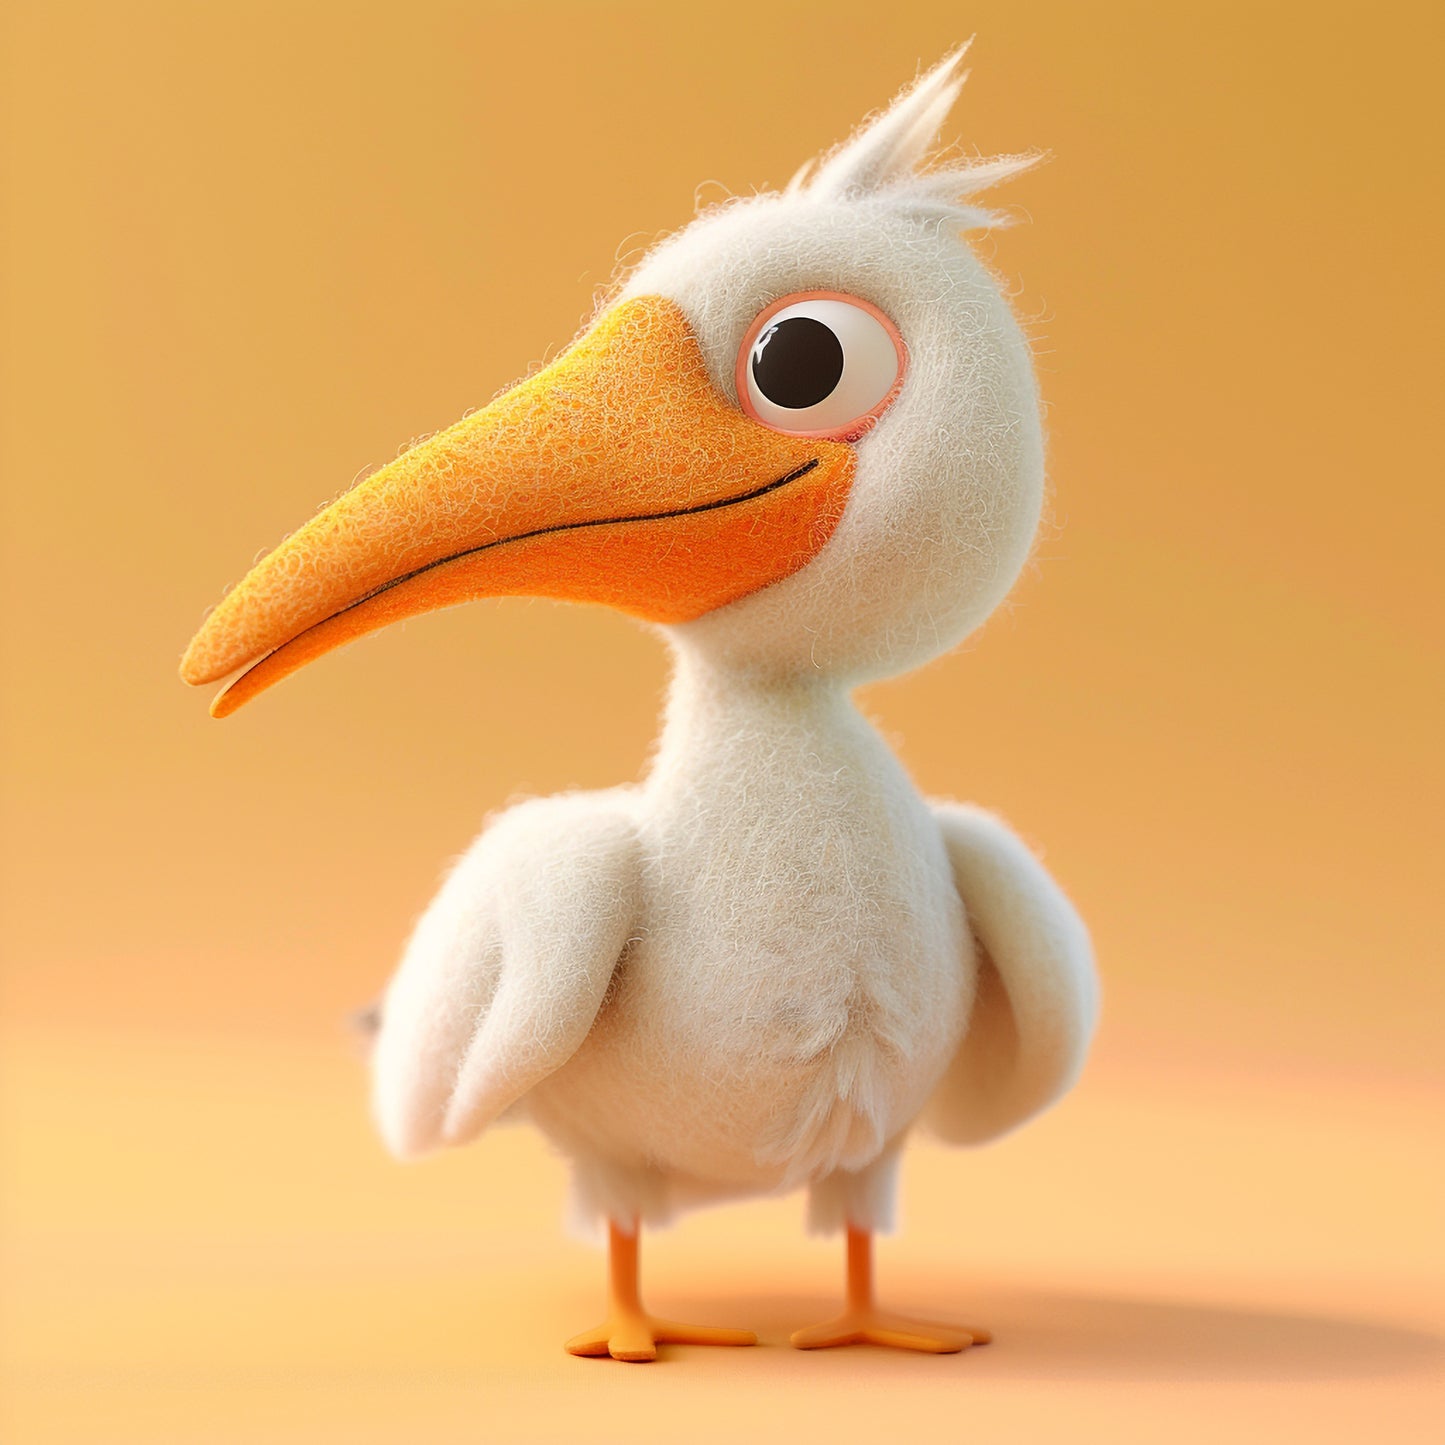 Adorable Cartoon Pelican on Warm Background Looking Friendly